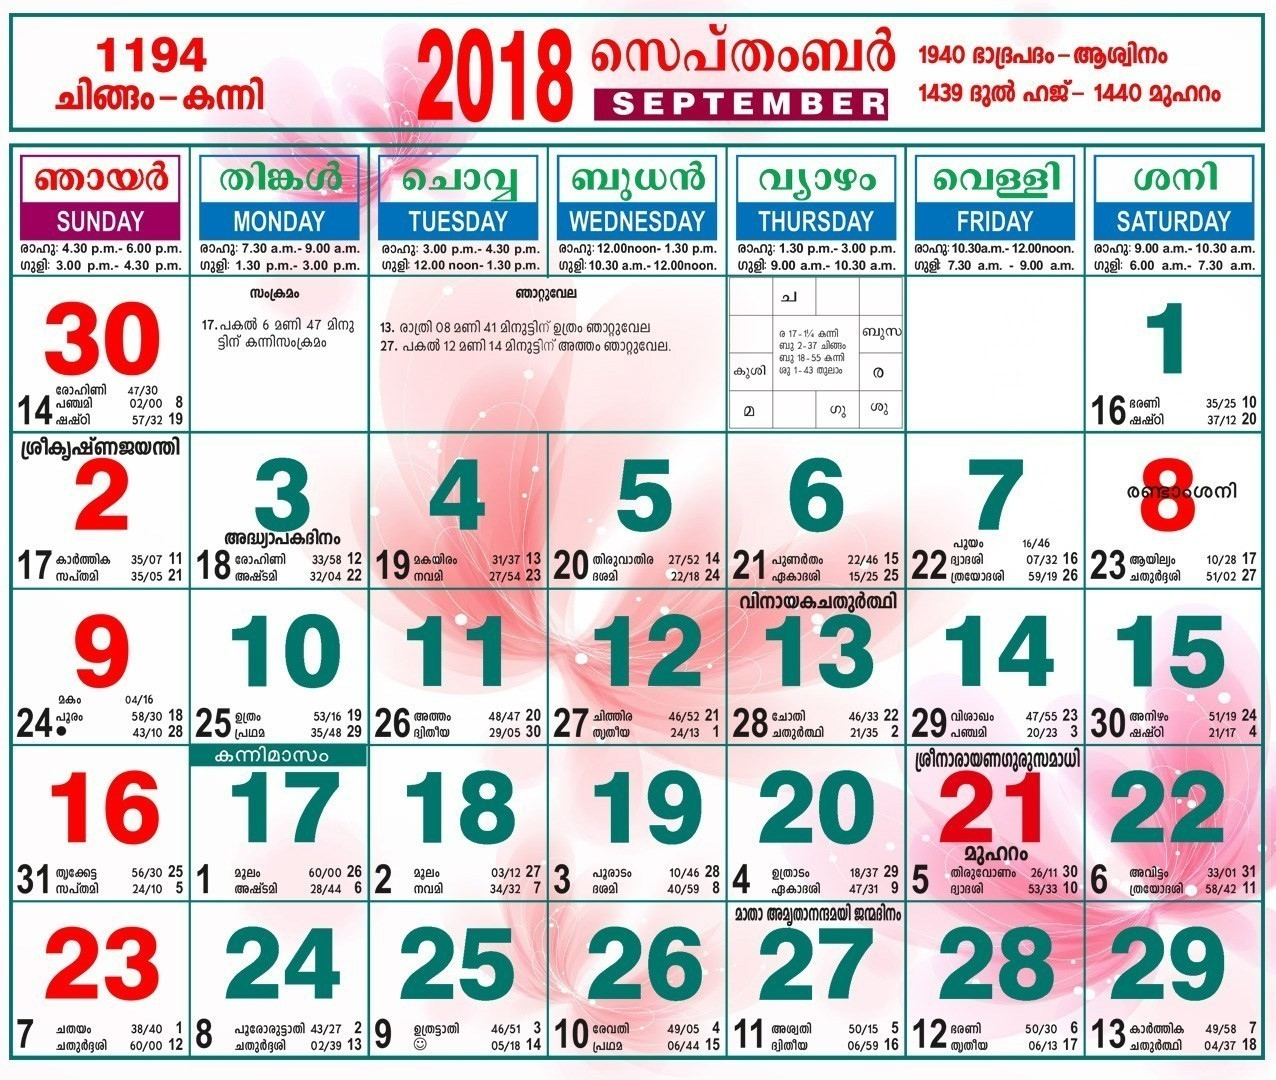 1996 August 29 Malayalam Calendar - Template Calendar Design Malayalam Calendar 2021 November